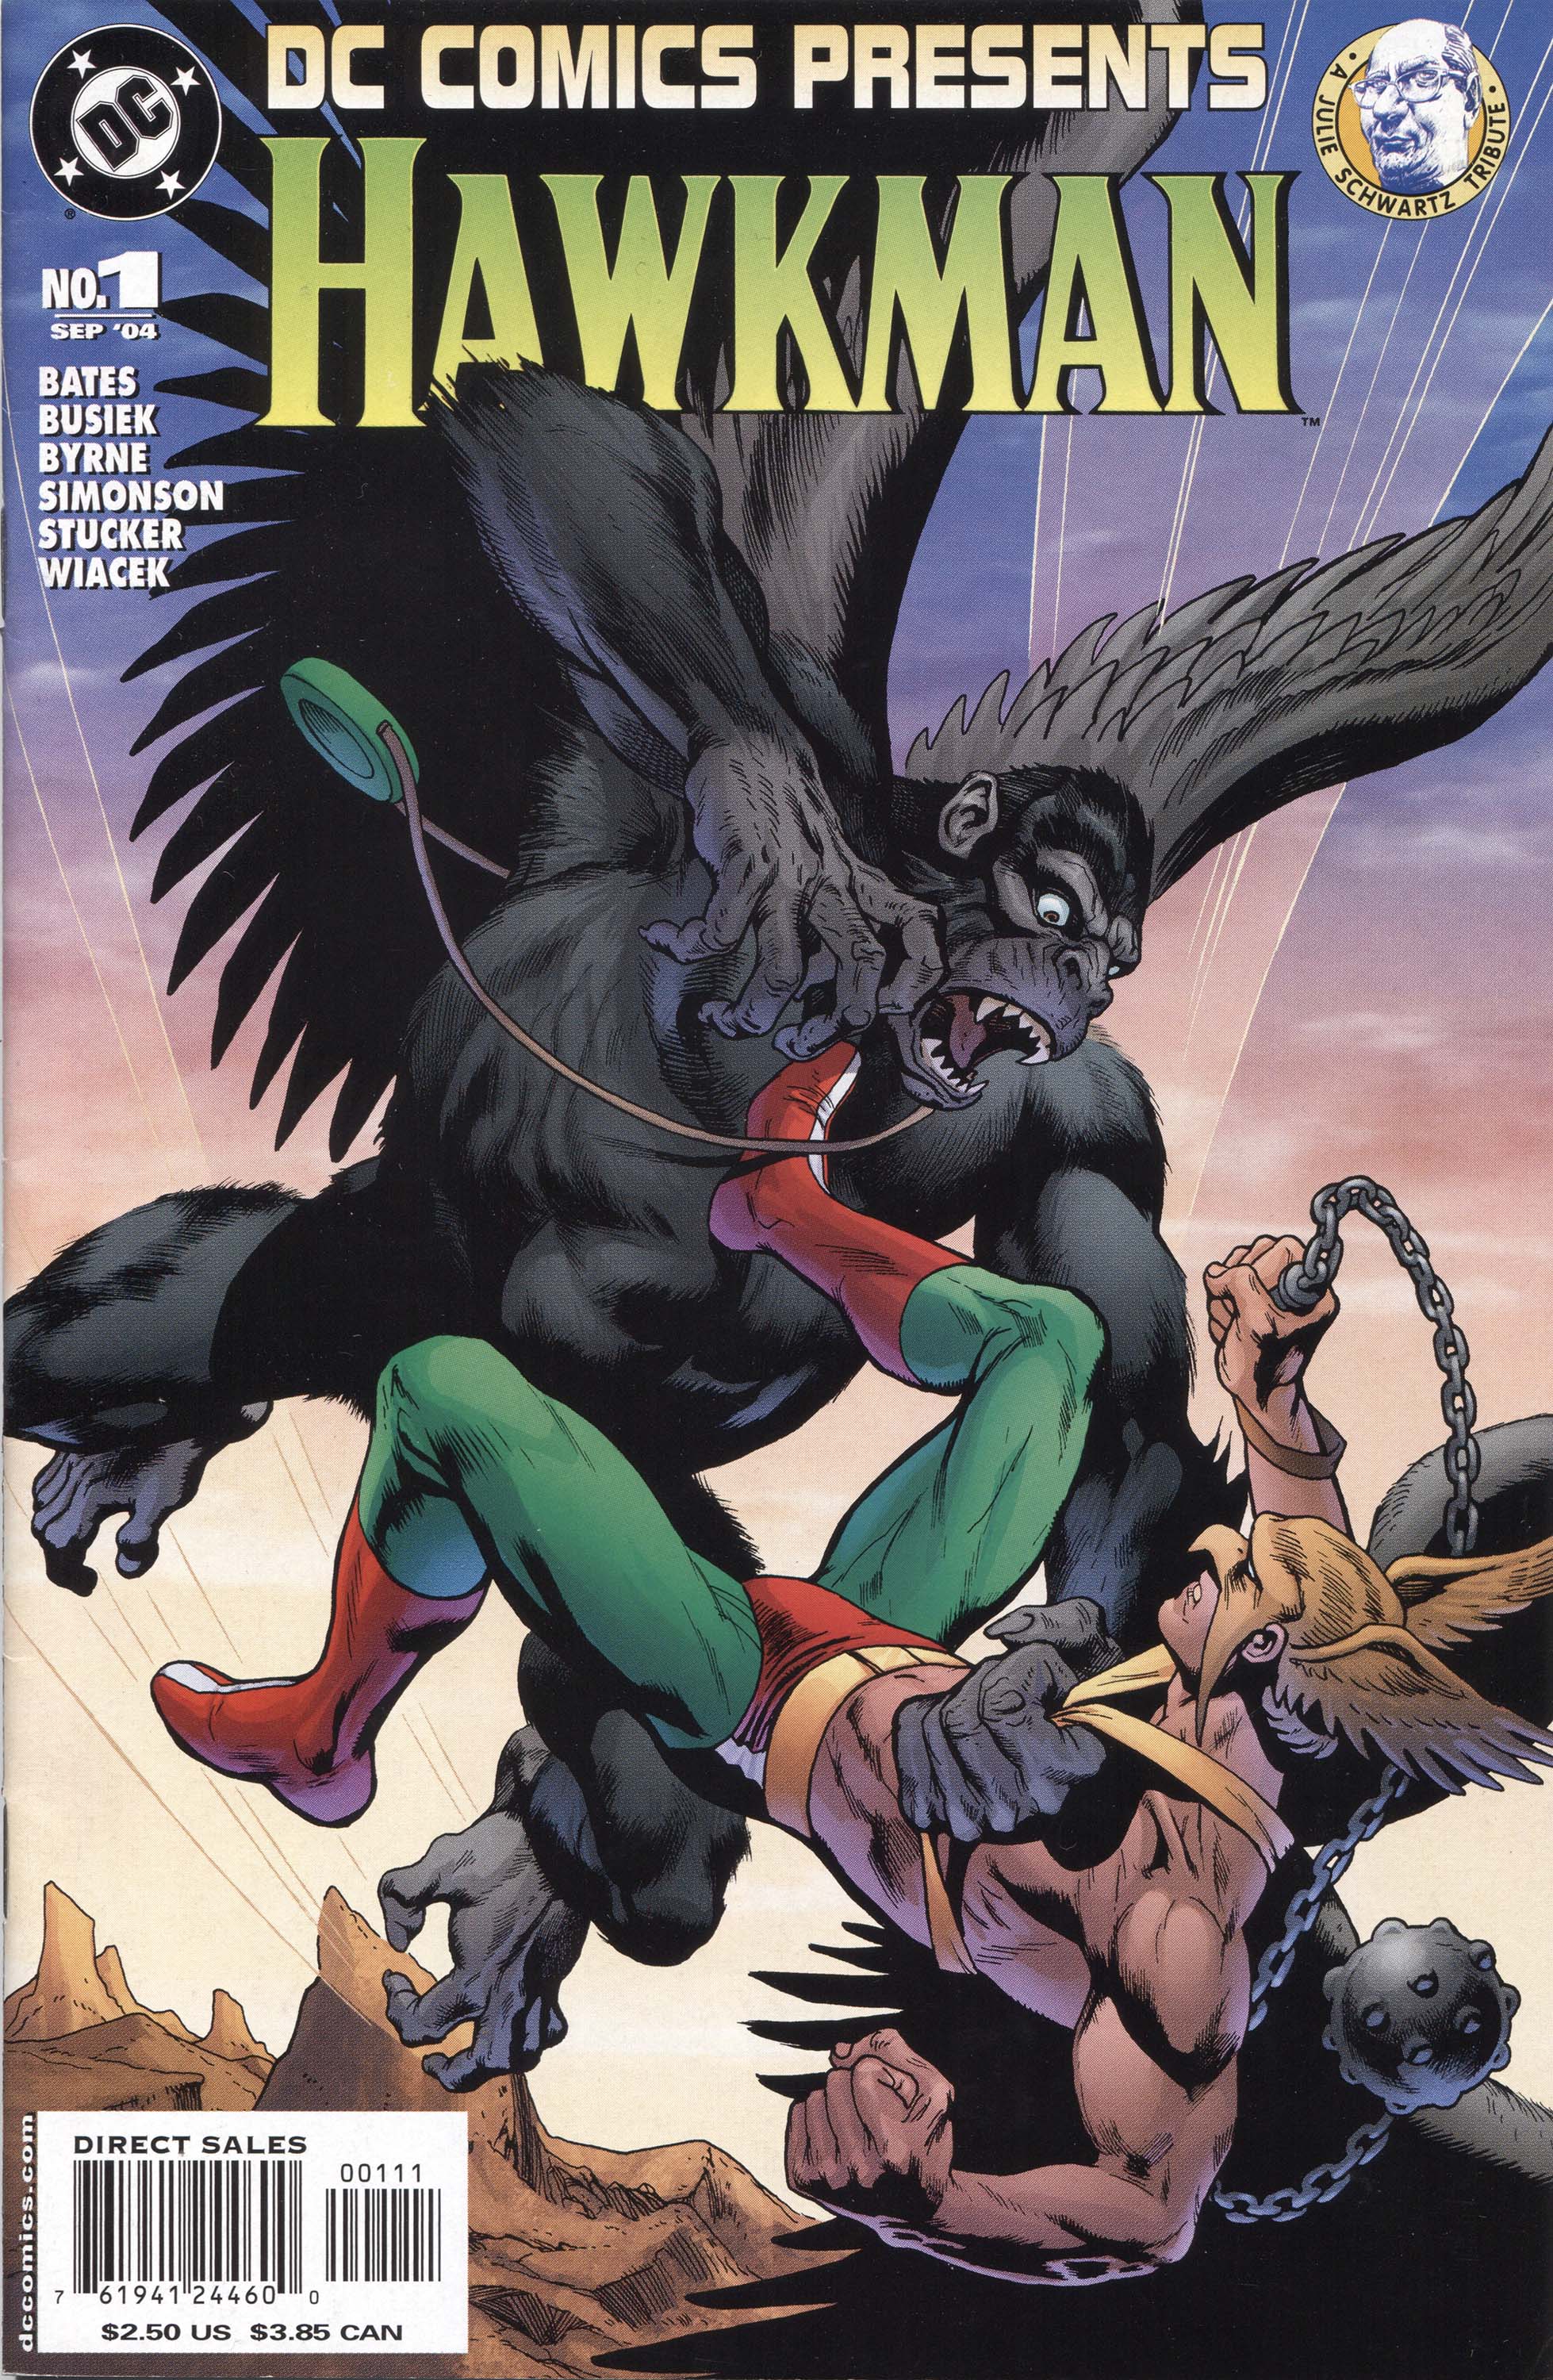 DC Comics Presents: Hawkman, cover, art by José Luis Garcia-Lopez & Kevin Nowlan